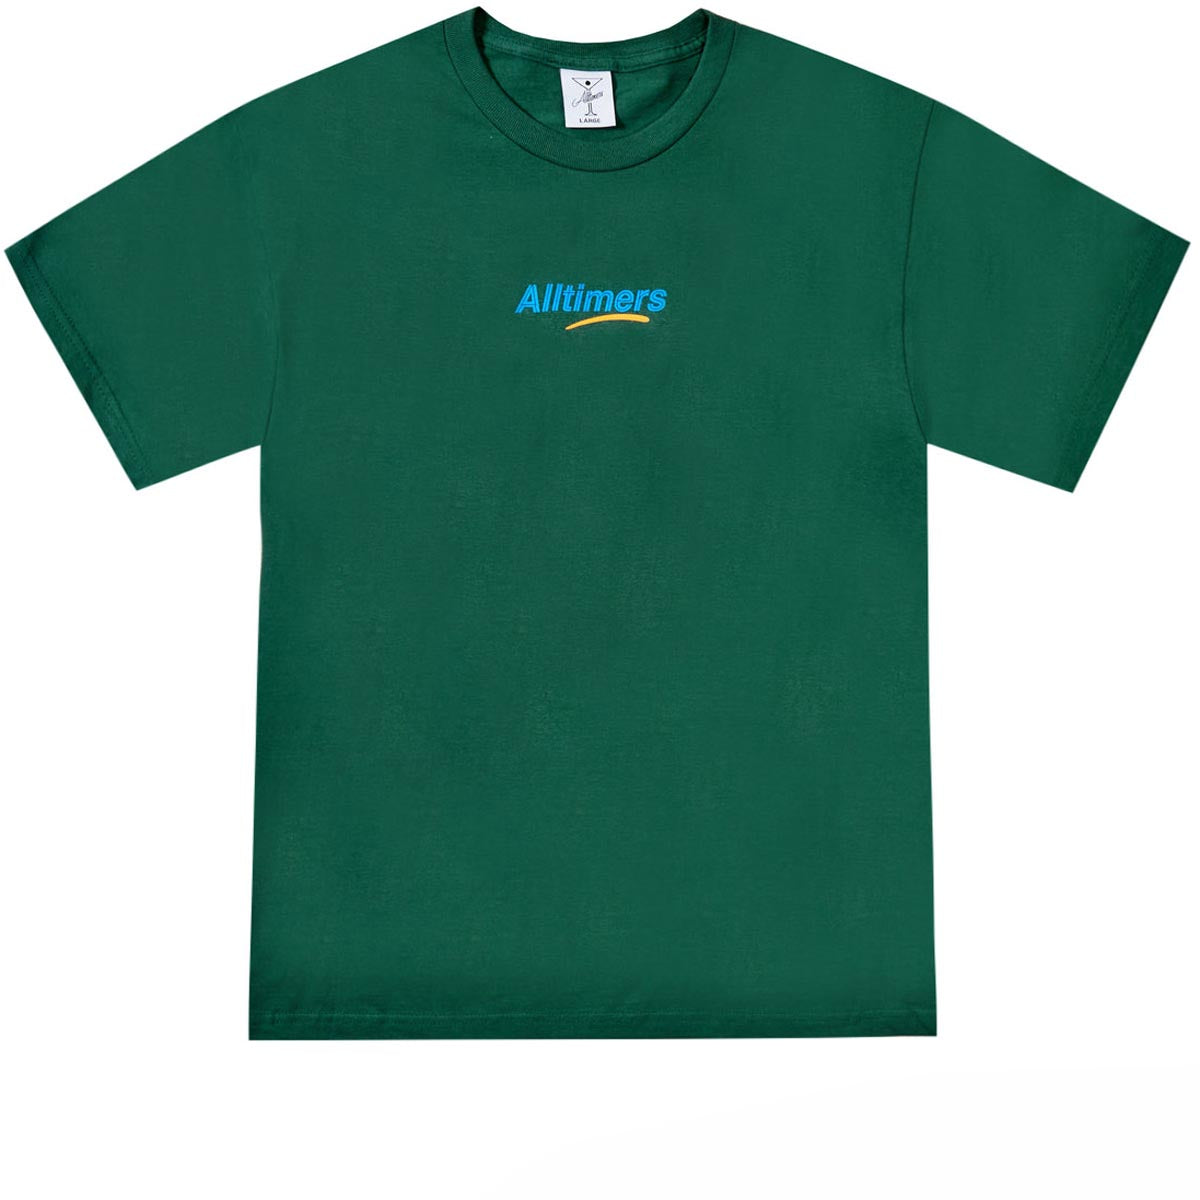 Alltimers Mid Range Estate T-Shirt - Forest Green image 1